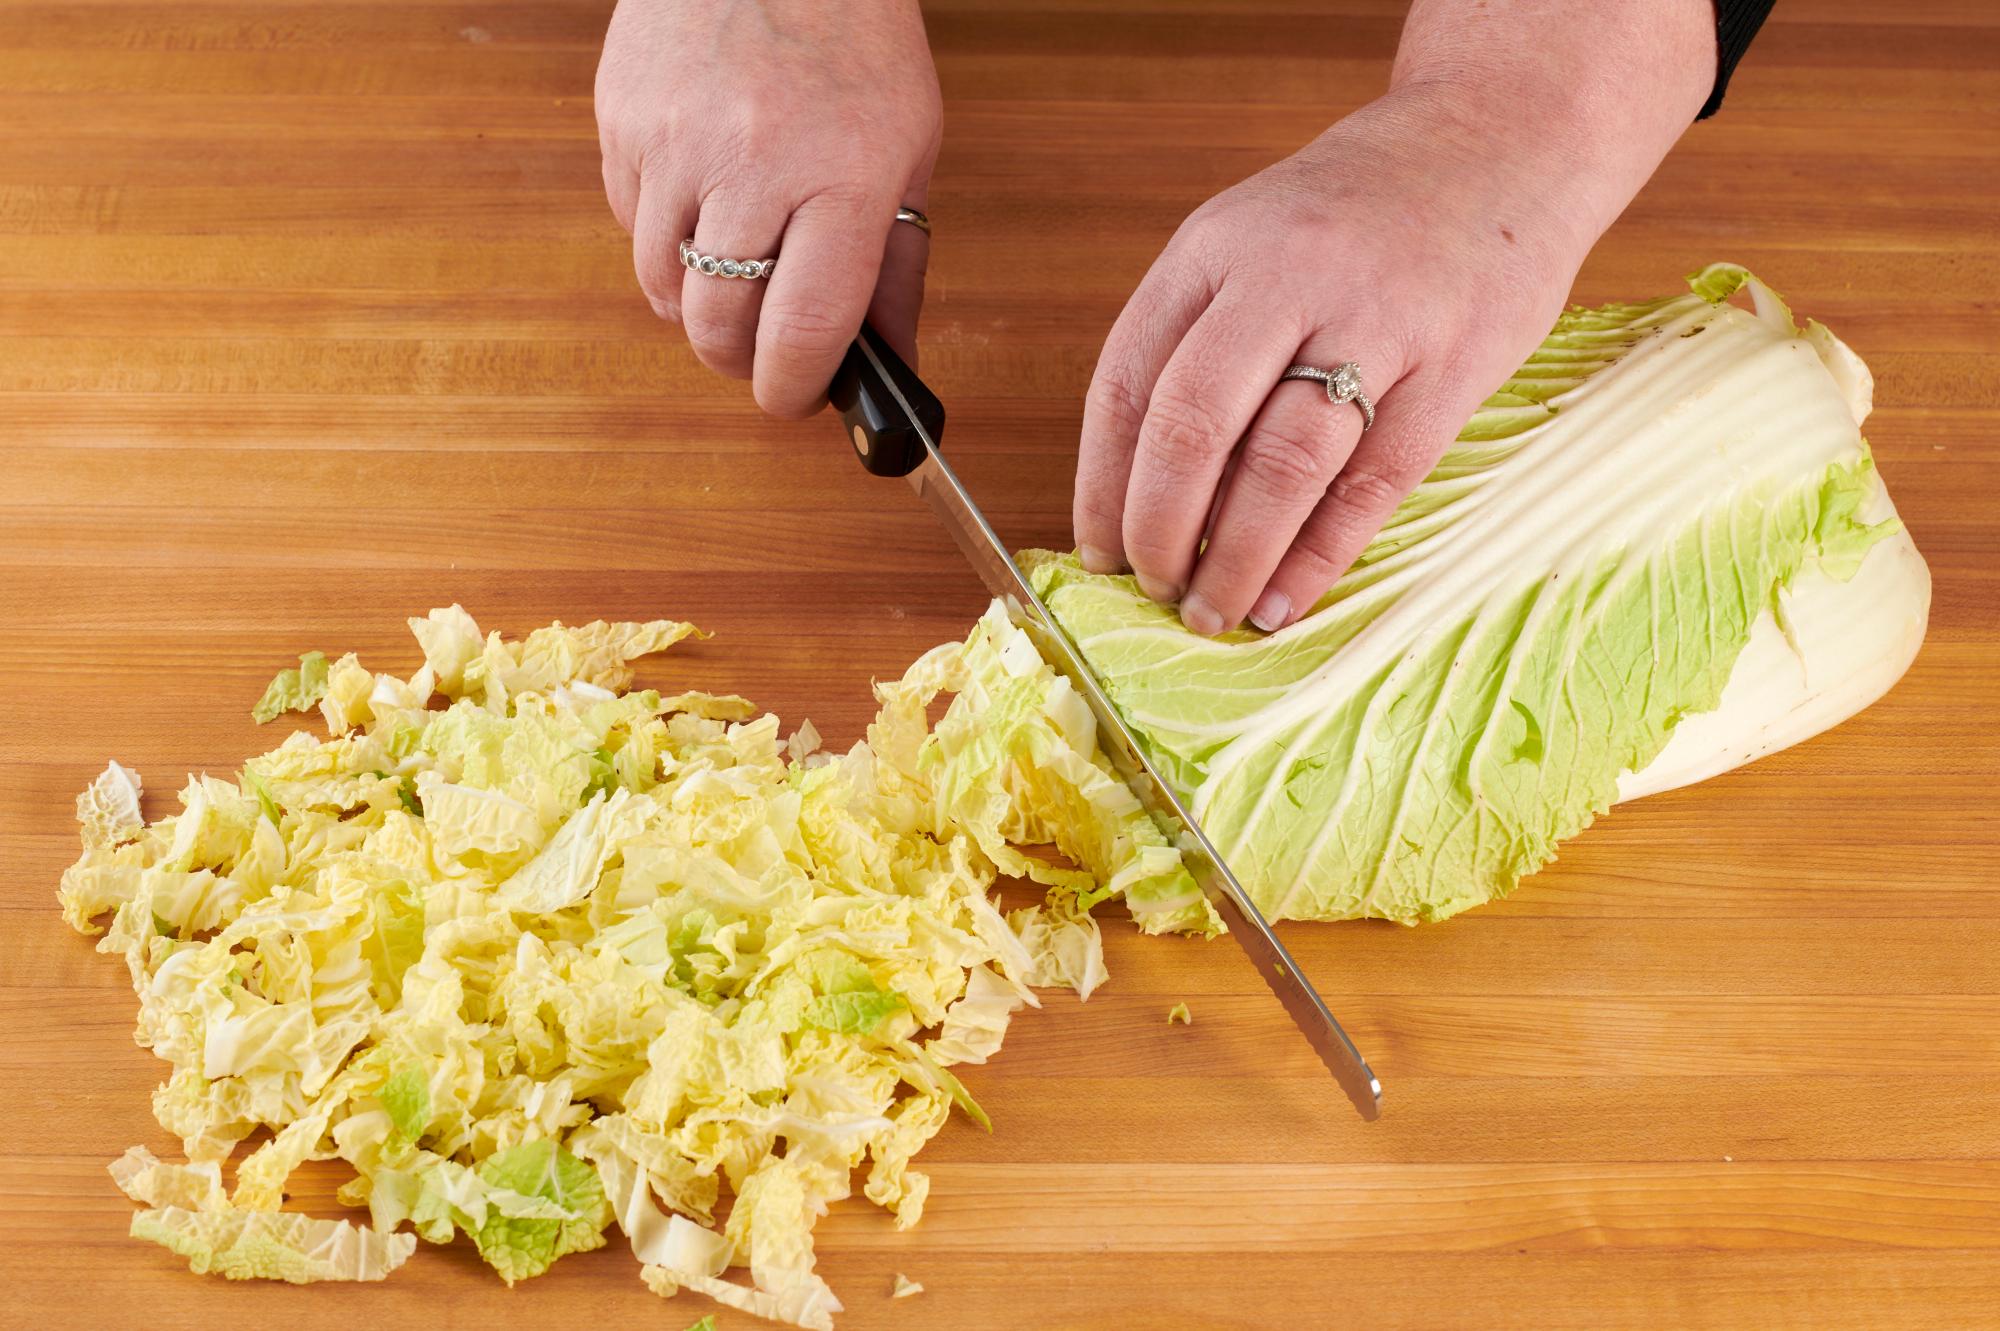 Shredding lettuce with a Petite Slicer.